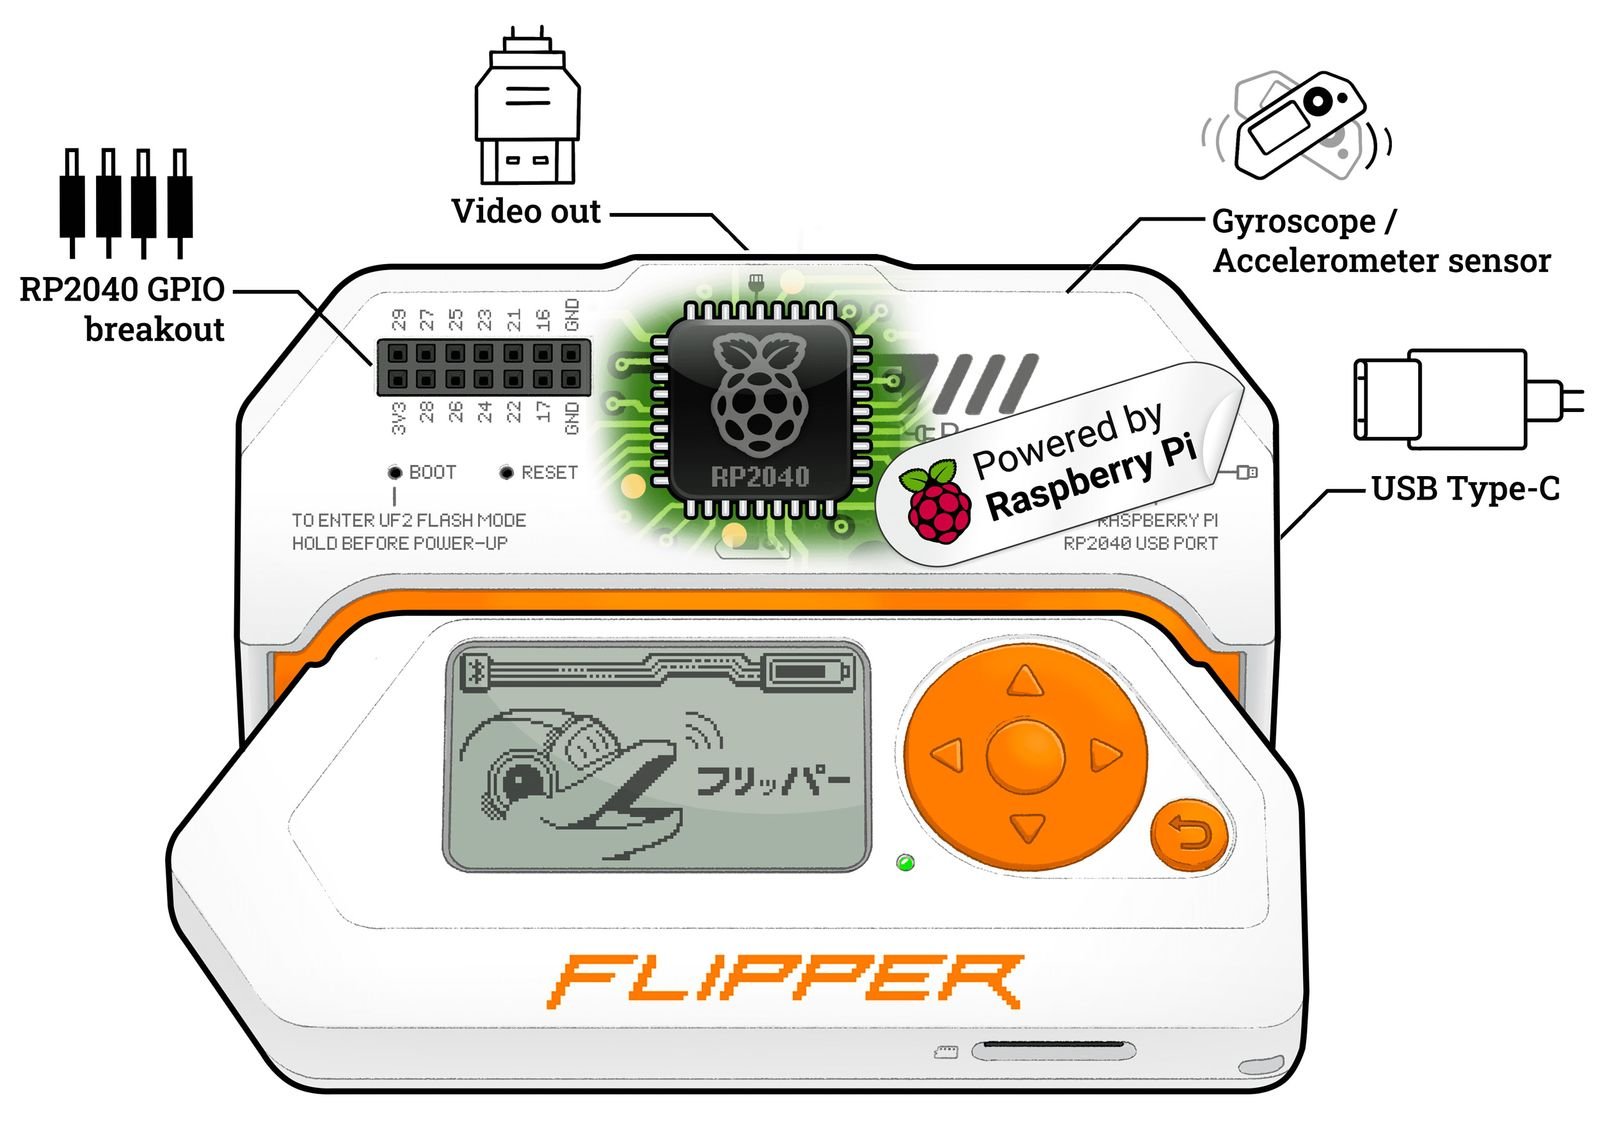 The NEXT Flipper Zero? Introducing the Flipper Nano!! 